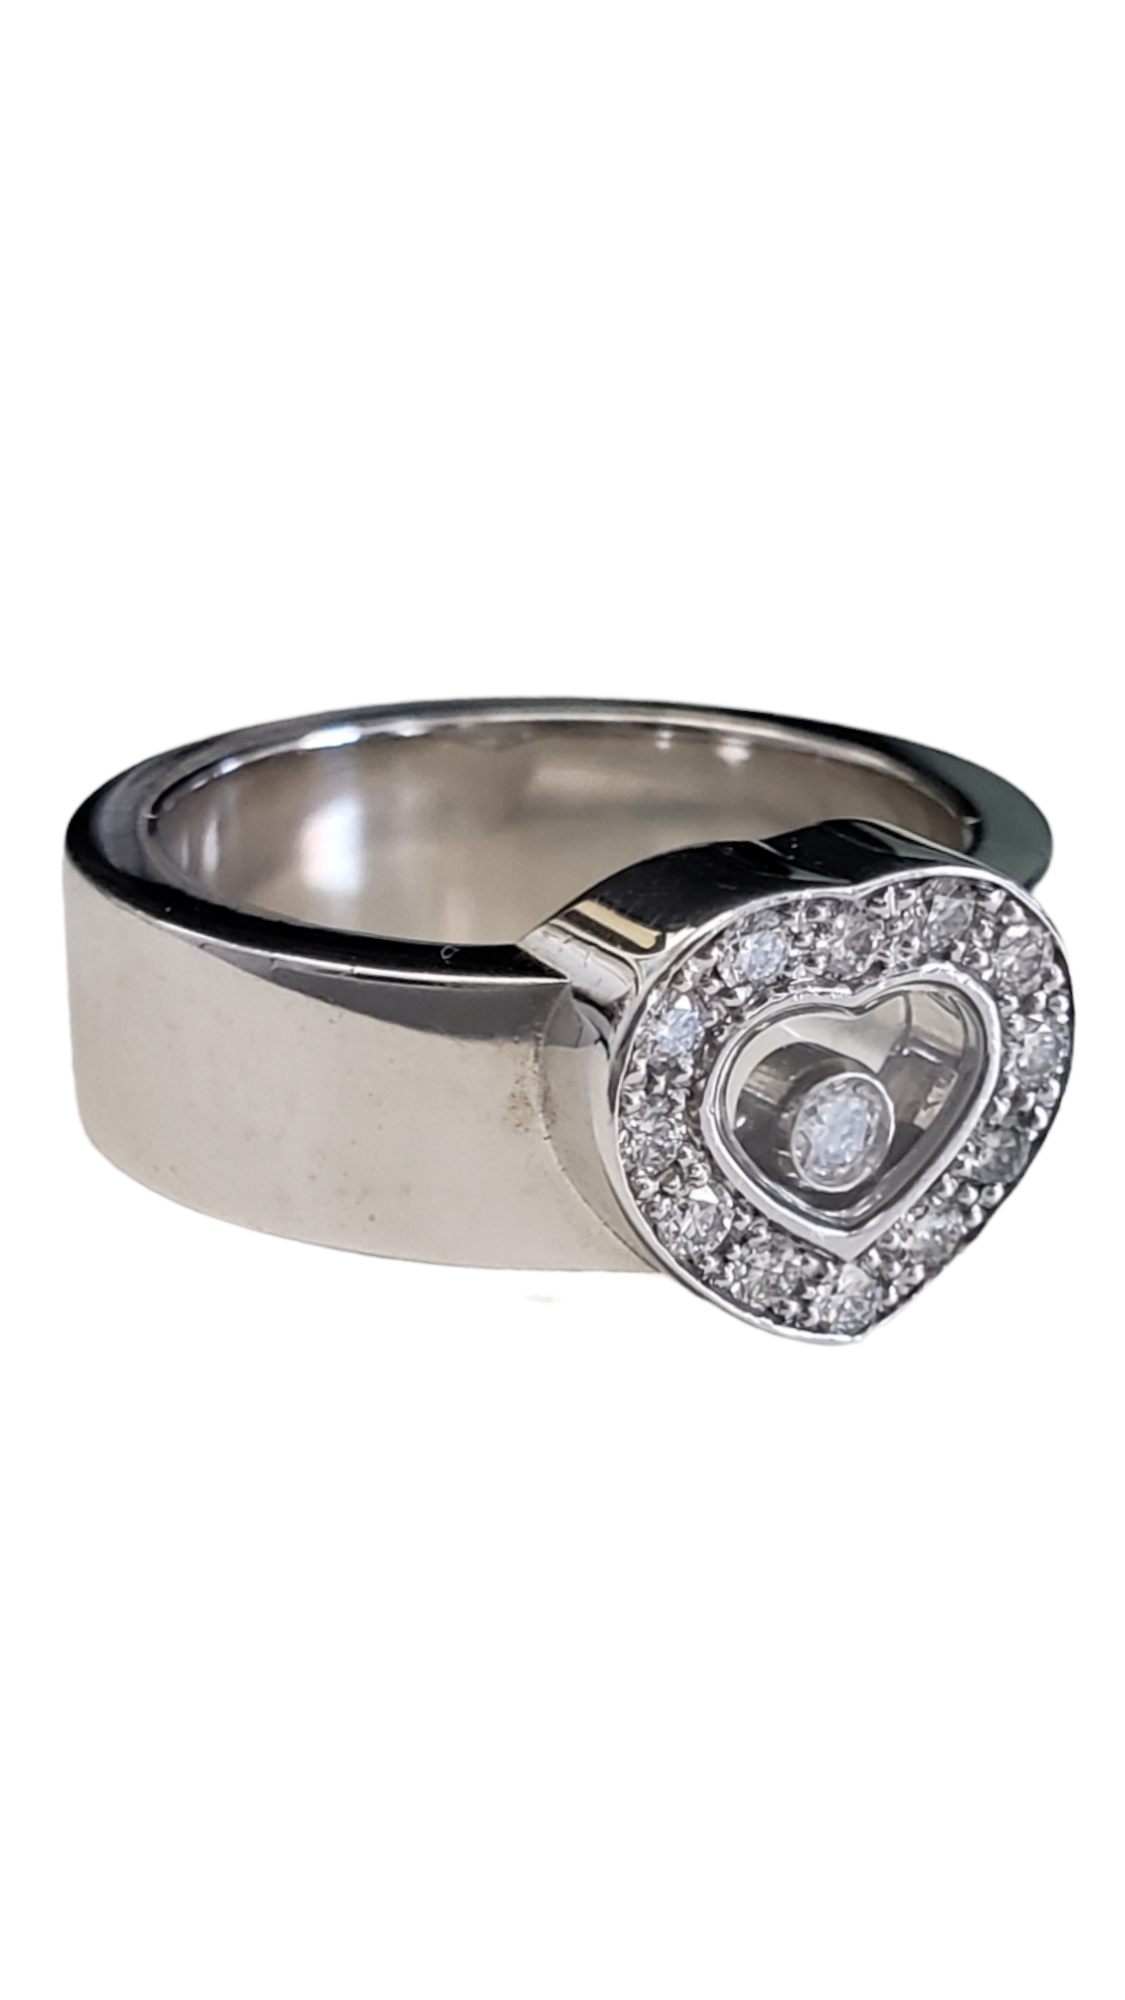 Chopard Happy Diamonds Heart 18K White Gold Ring Size 5.5